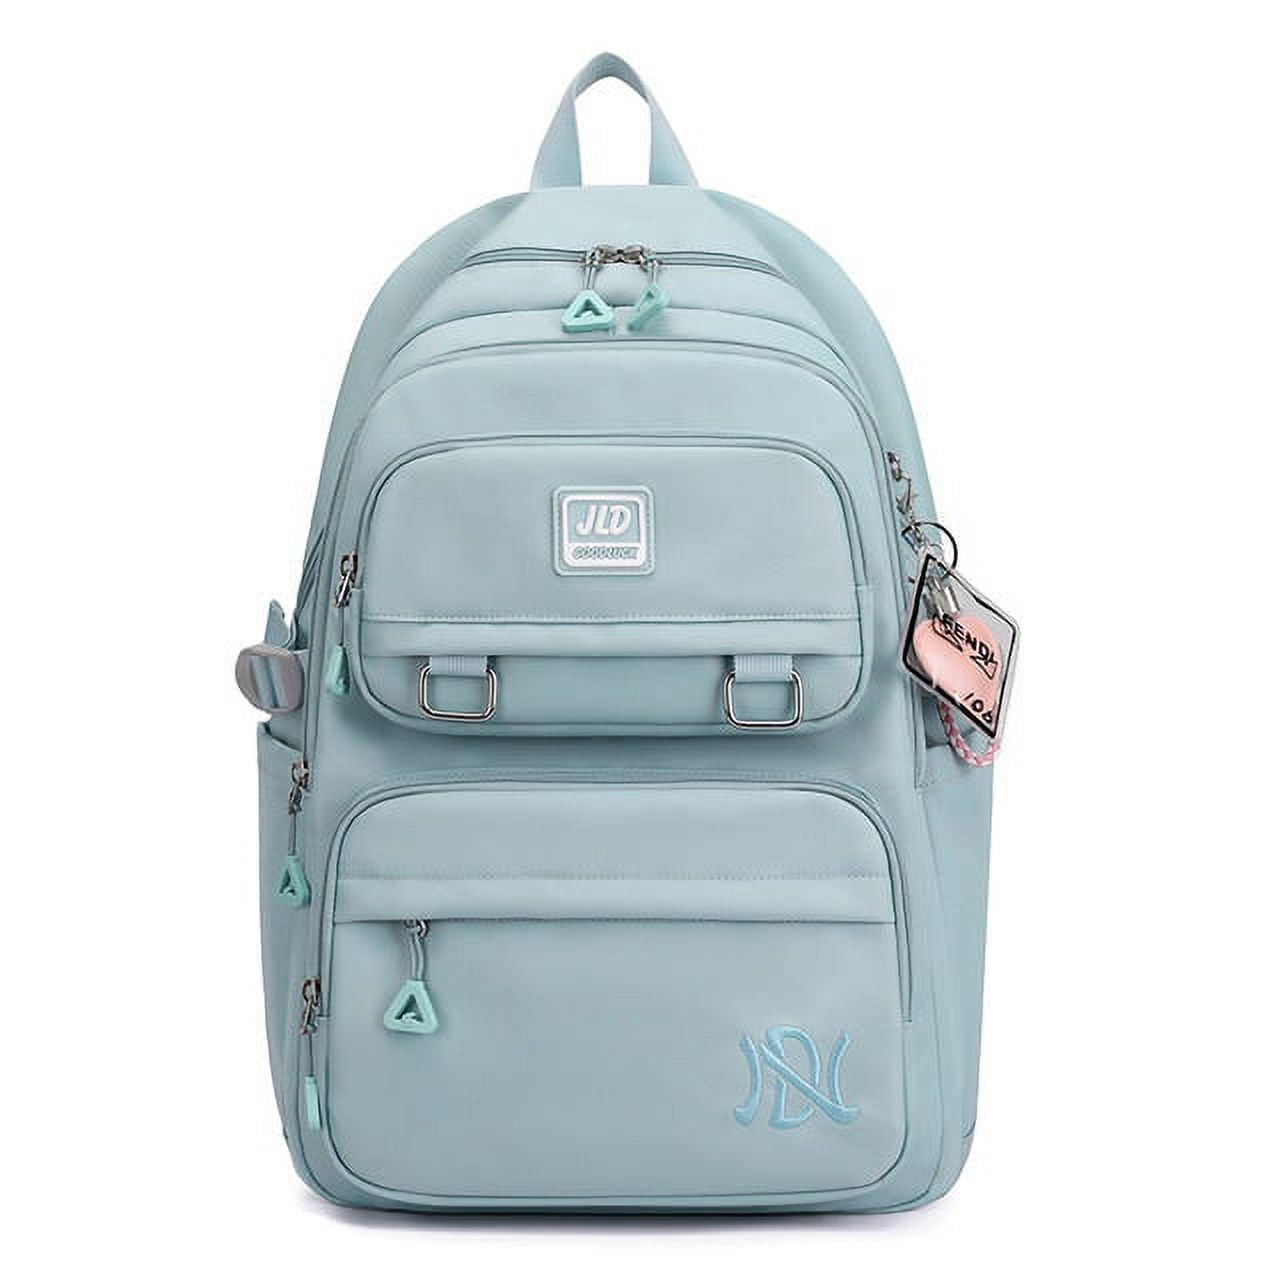 CoCopeaunt Girls light Children school bags For Beautiful Girls travel  Backpacks Fashion Waterproof Nylon School Bag sac mochila feminina 